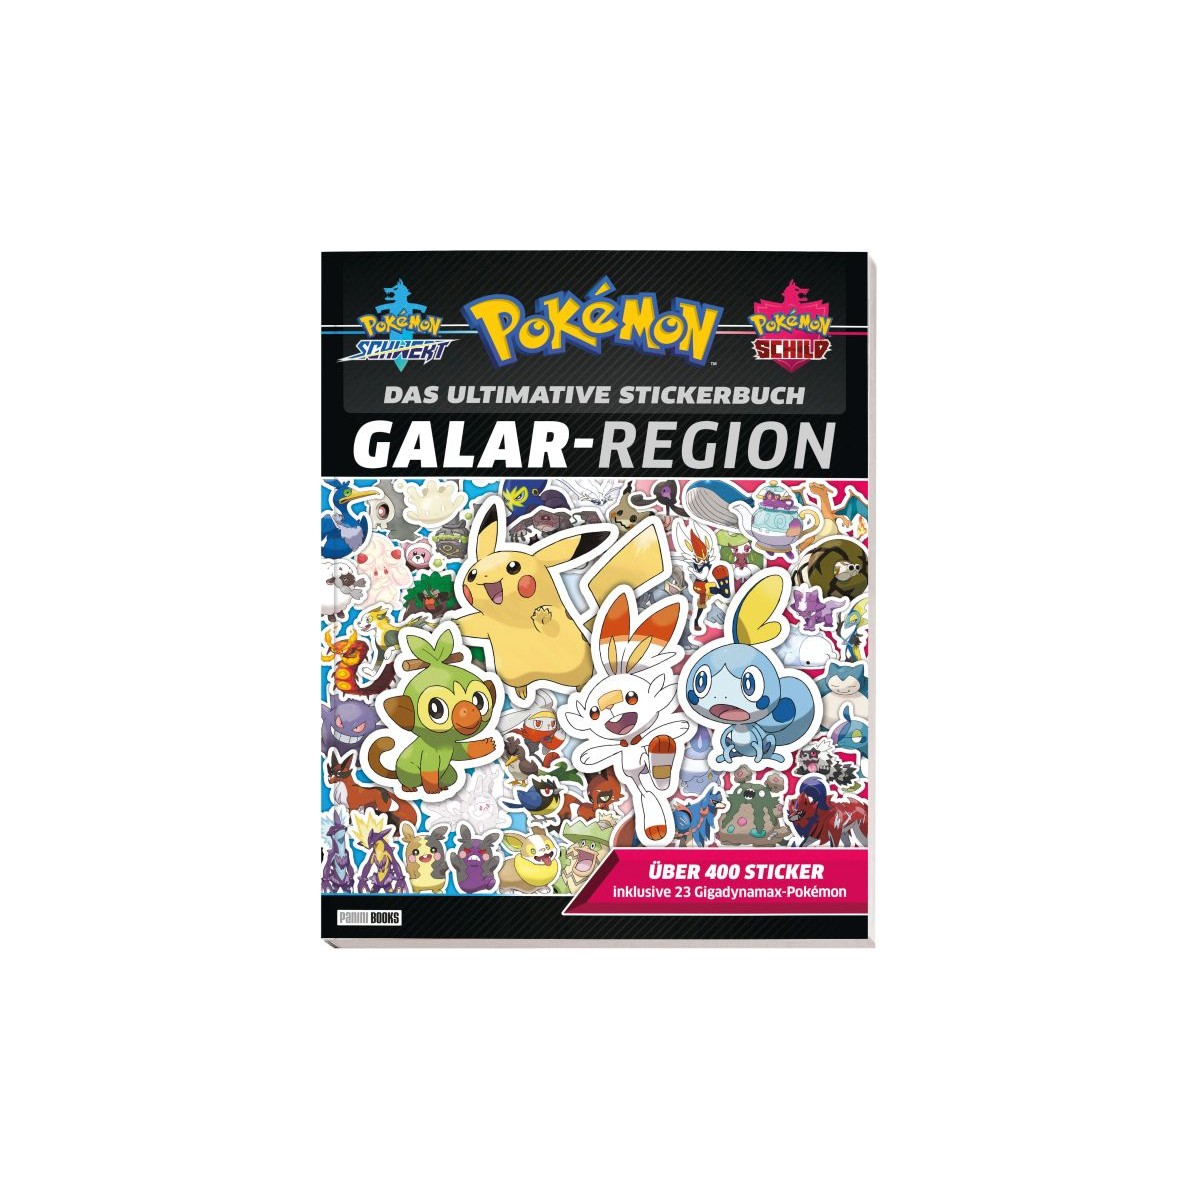 Pokémon - Galar Stickerbuch